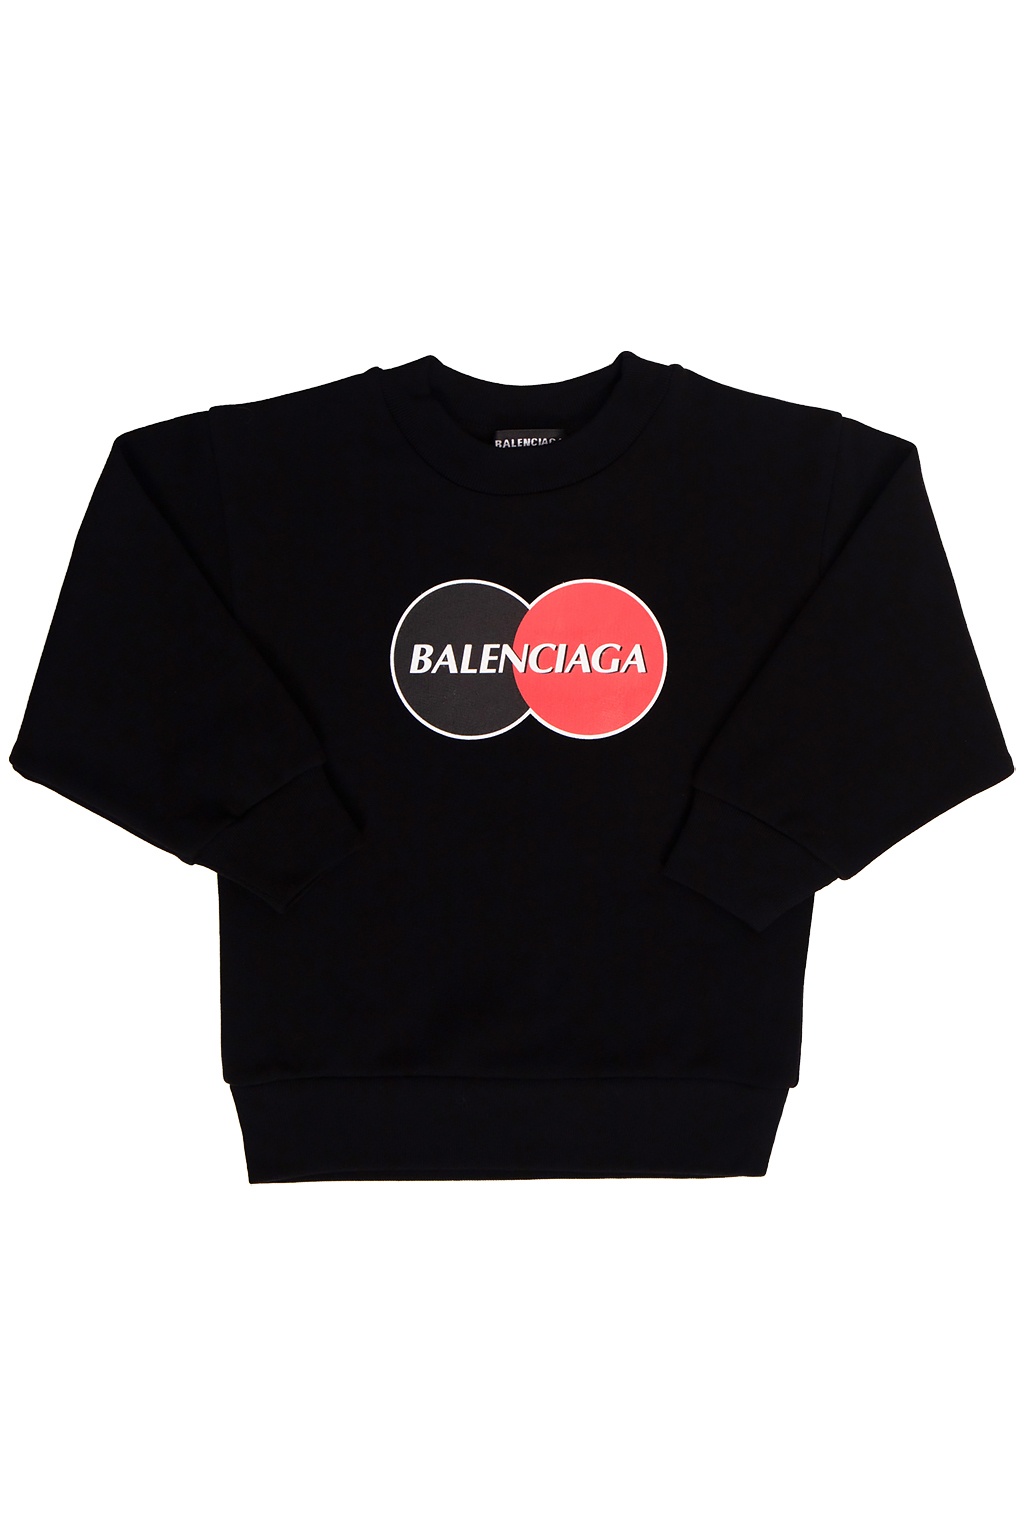 balenciaga black and white logo sweatshirt